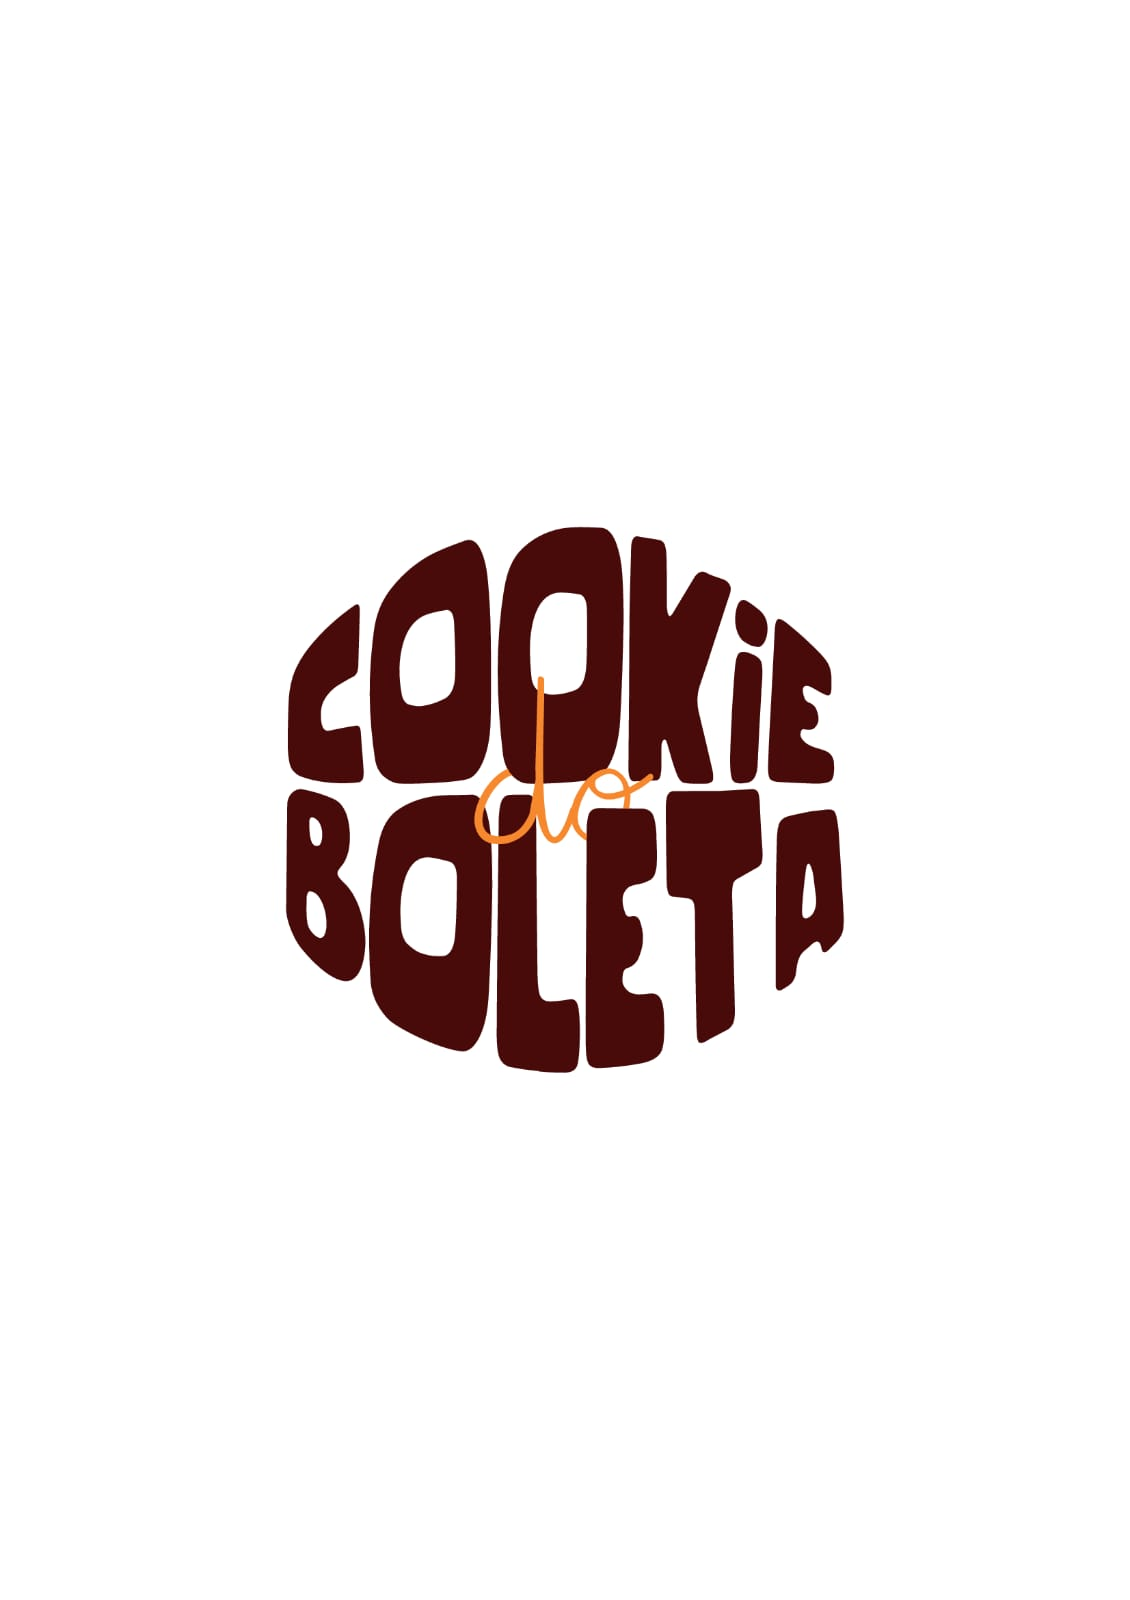 Logomarca Cookie do Boleta